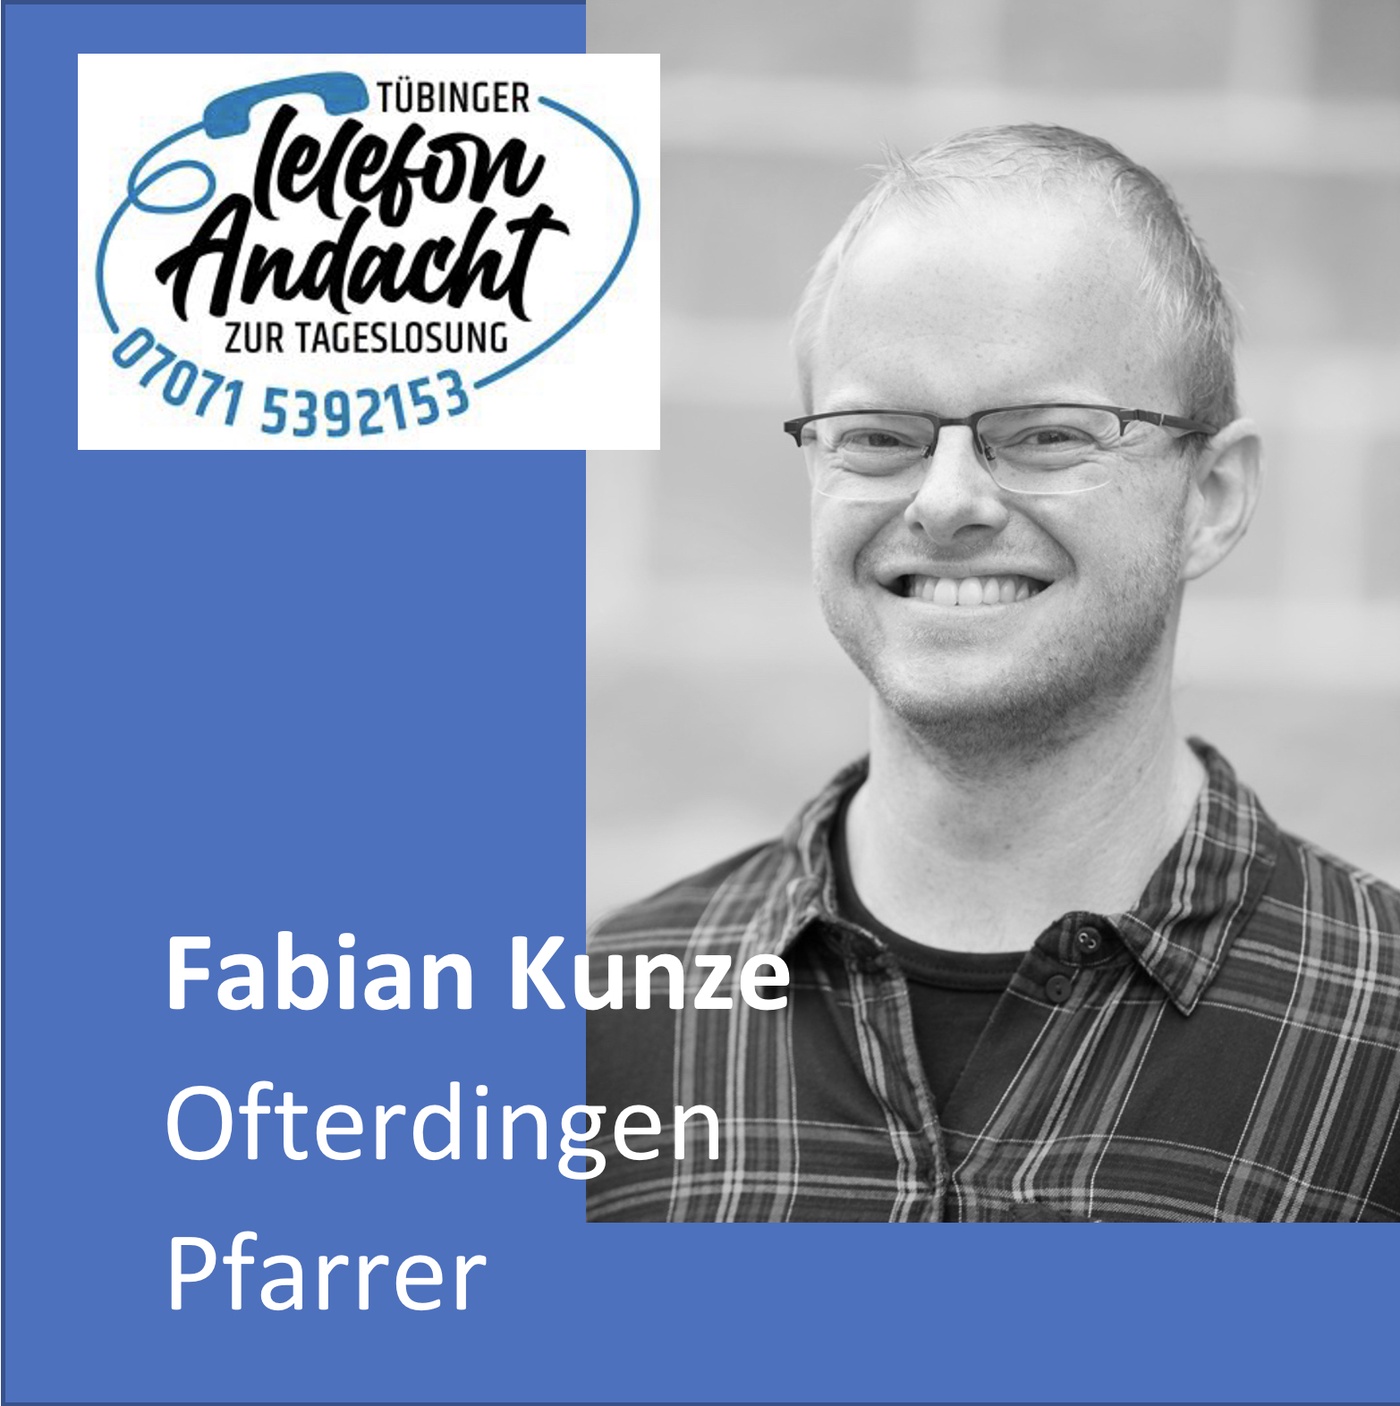 23 03 20 Fabian Kunze